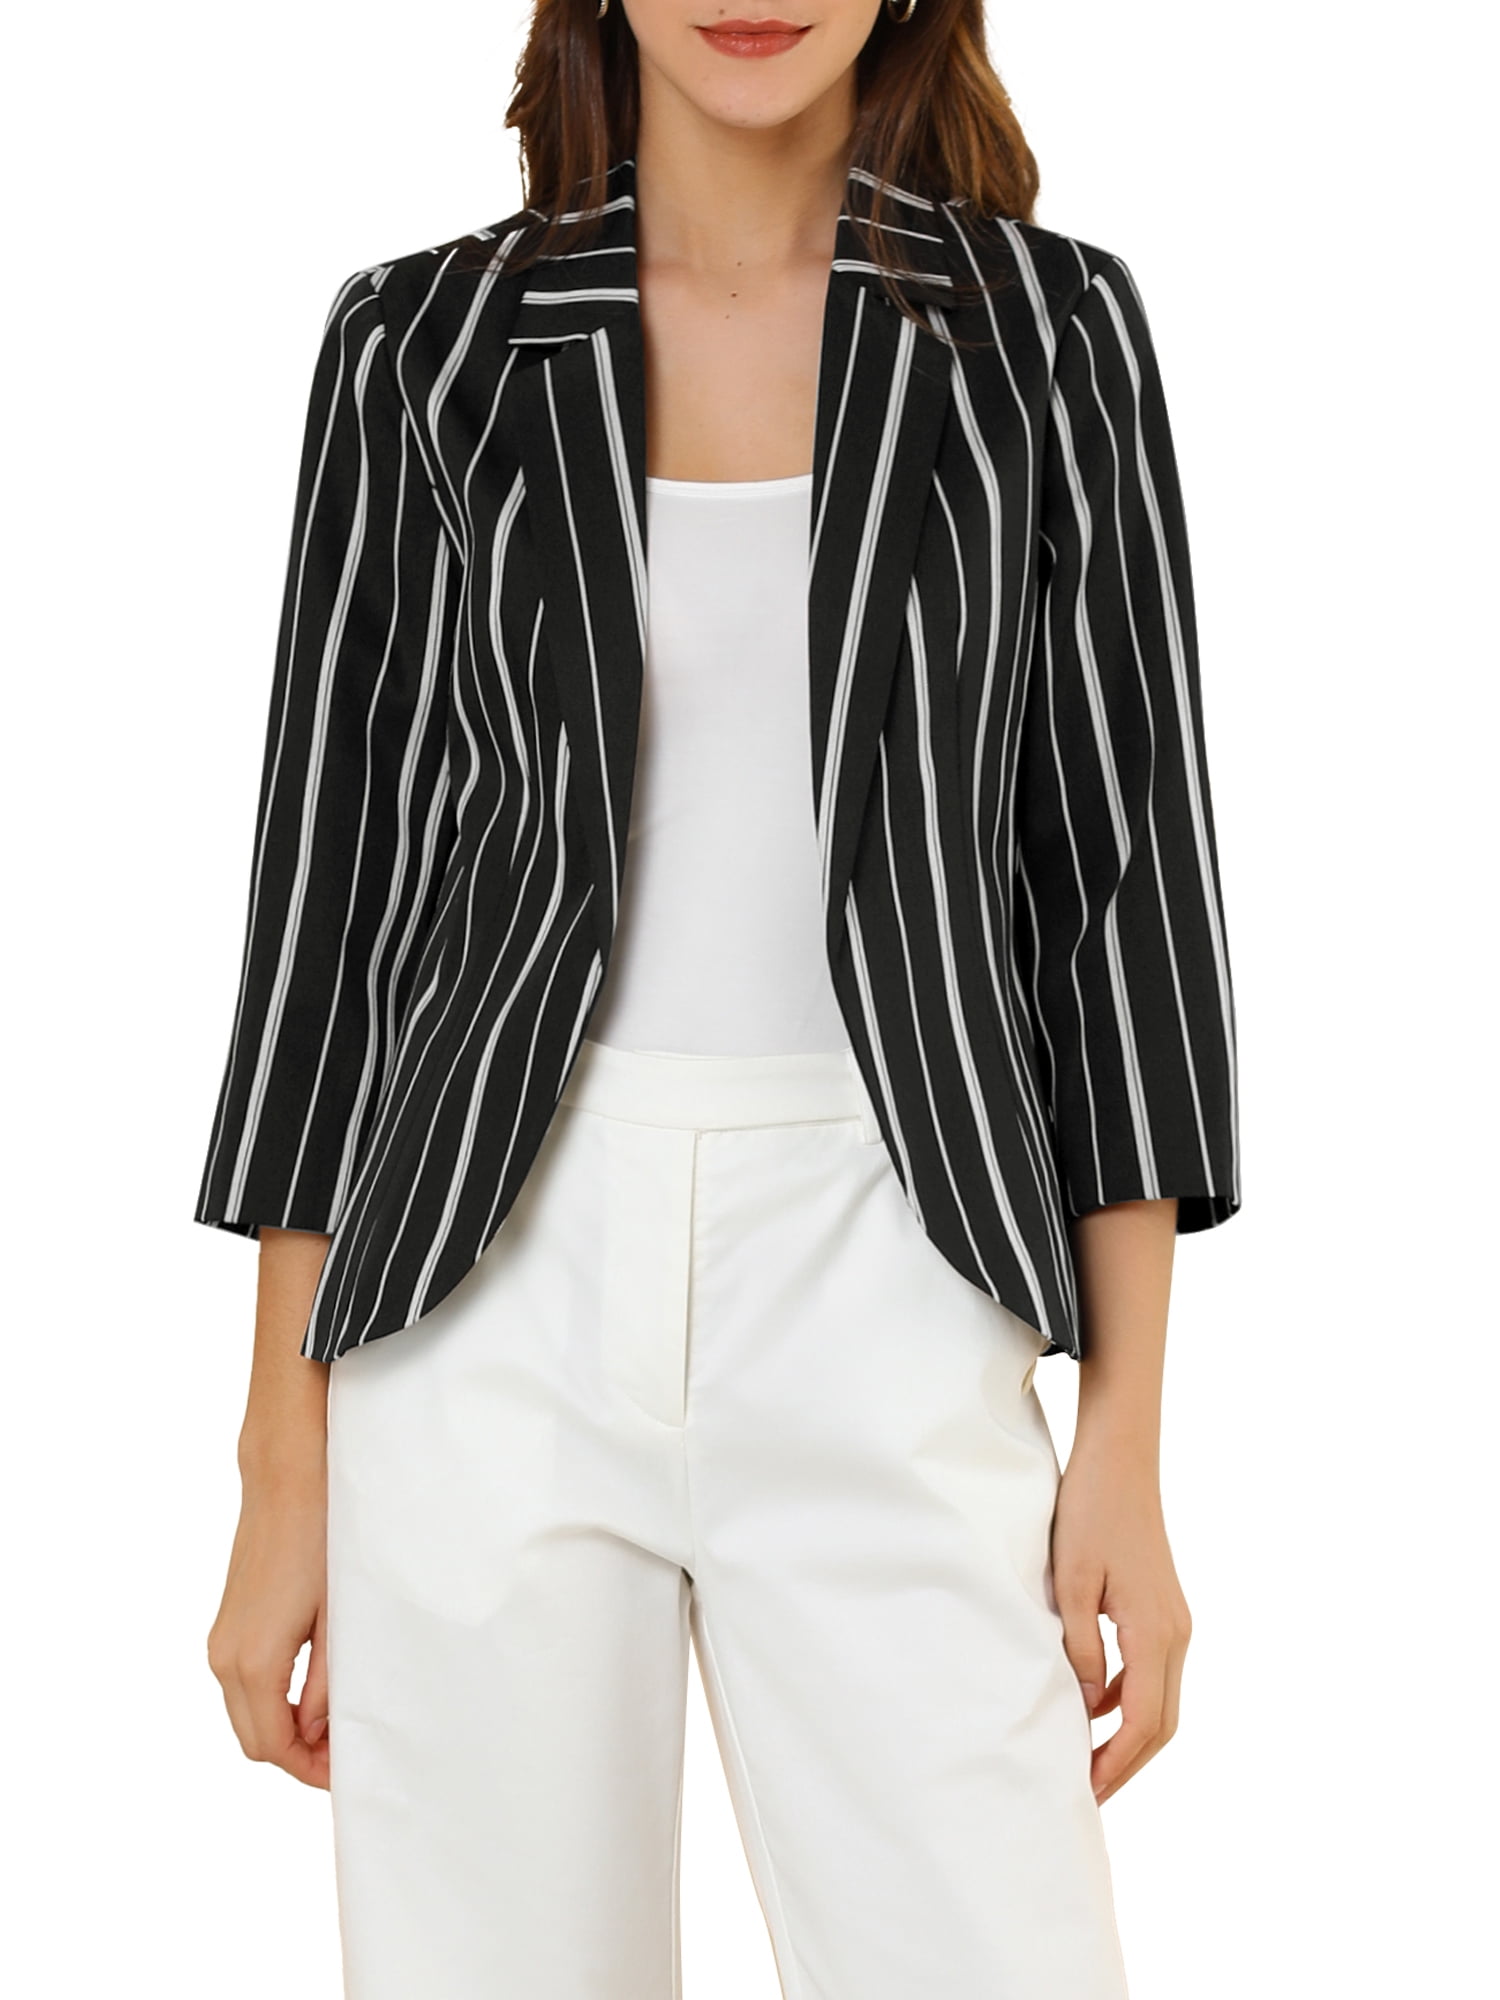 Womens Stripe 3/4 Sleeve Lightweight Office Work Suit Jacket Boyfriend Blazer